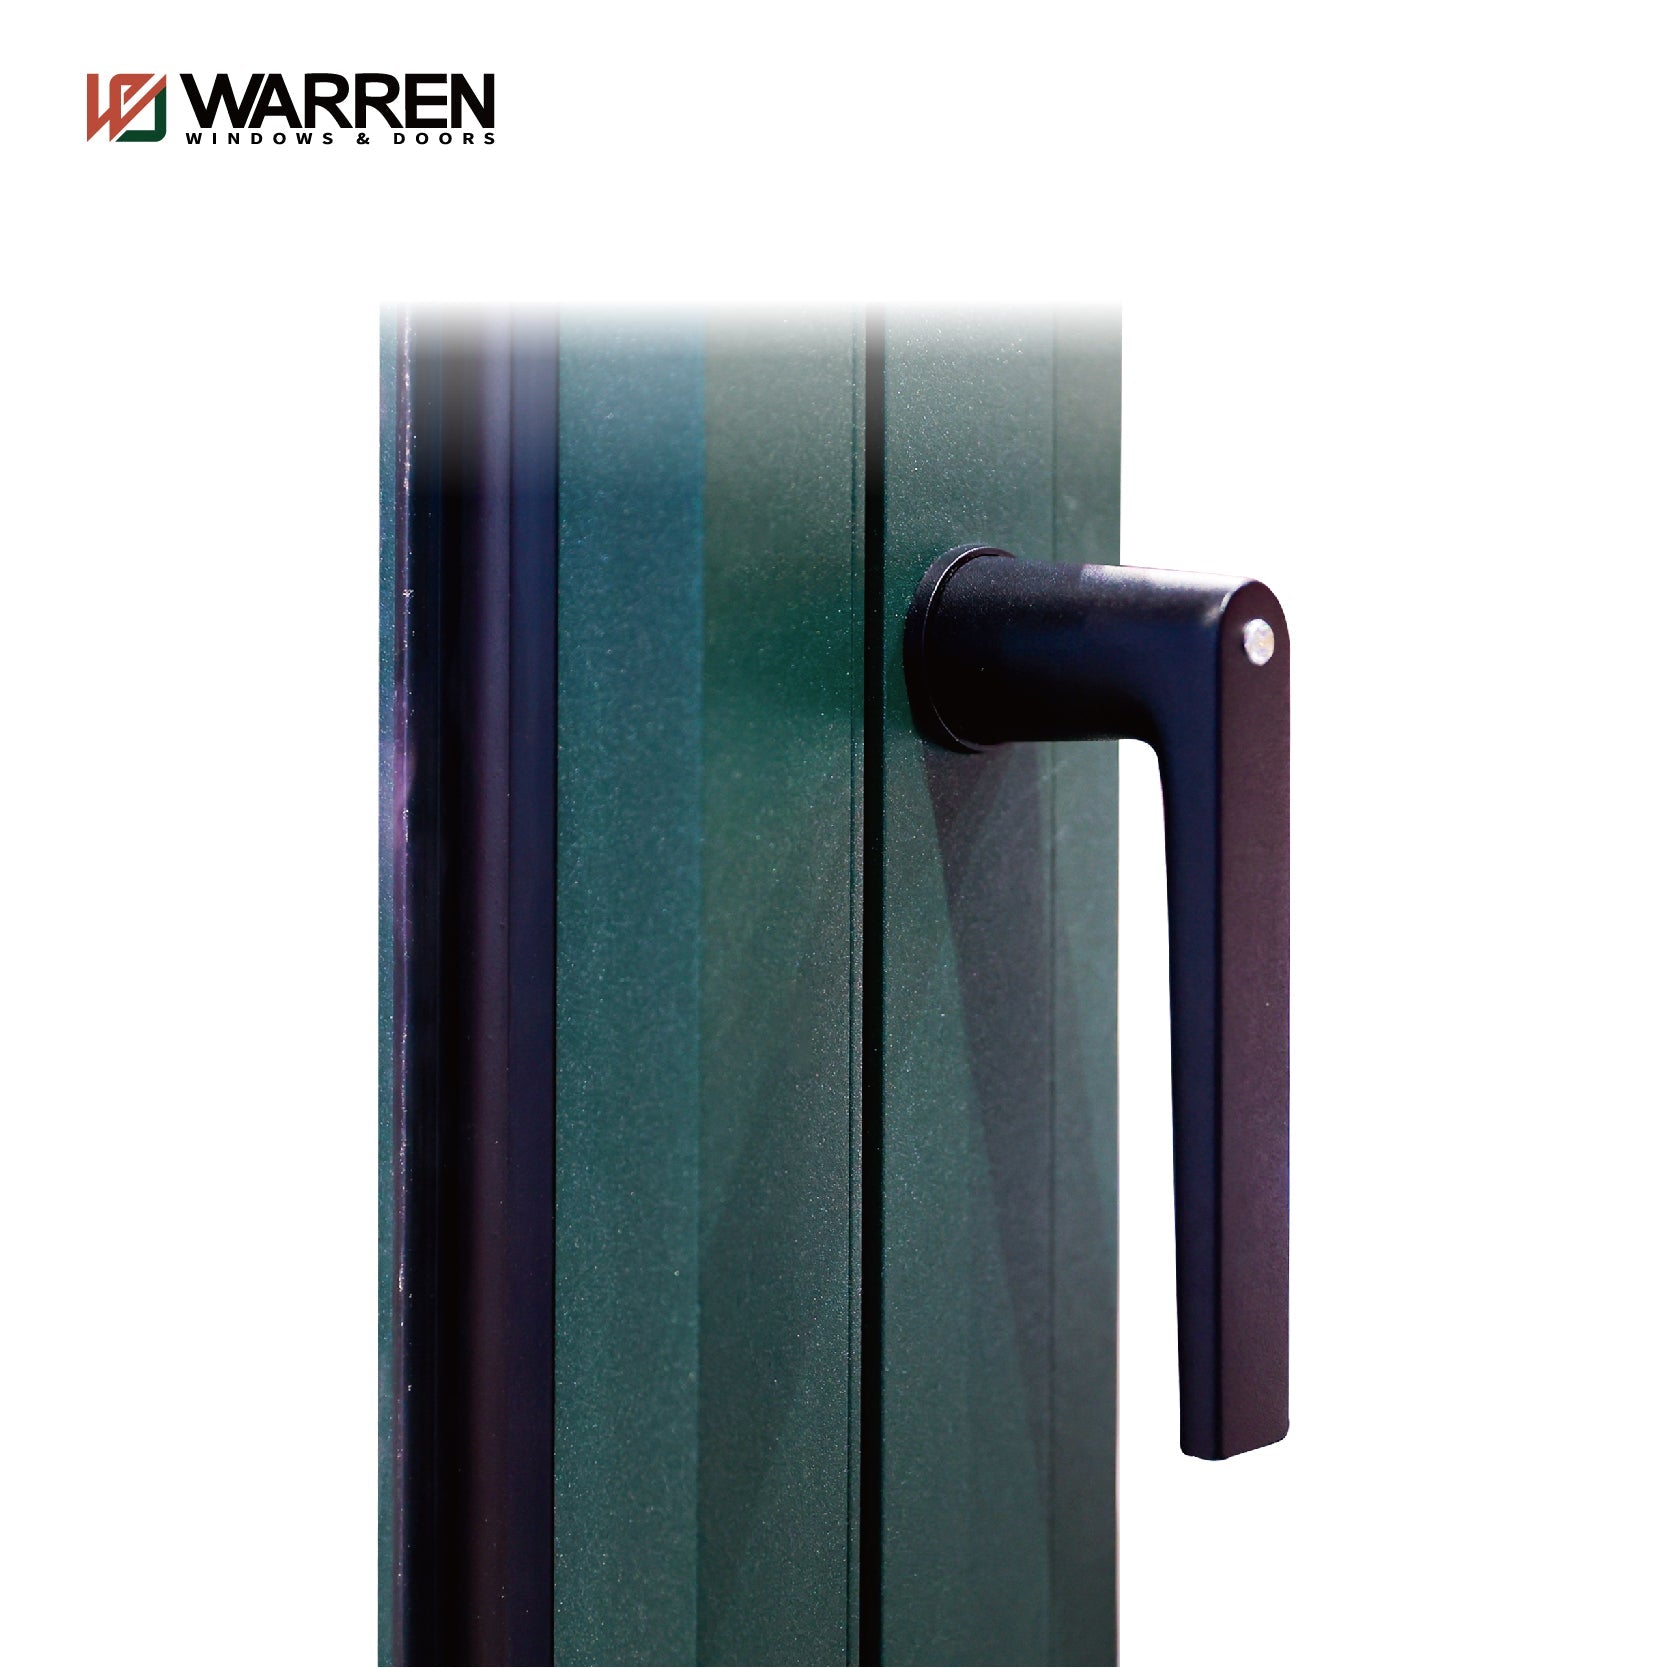 Warren 40x48 window hurricane impact security casement/picture window with full tempered glass